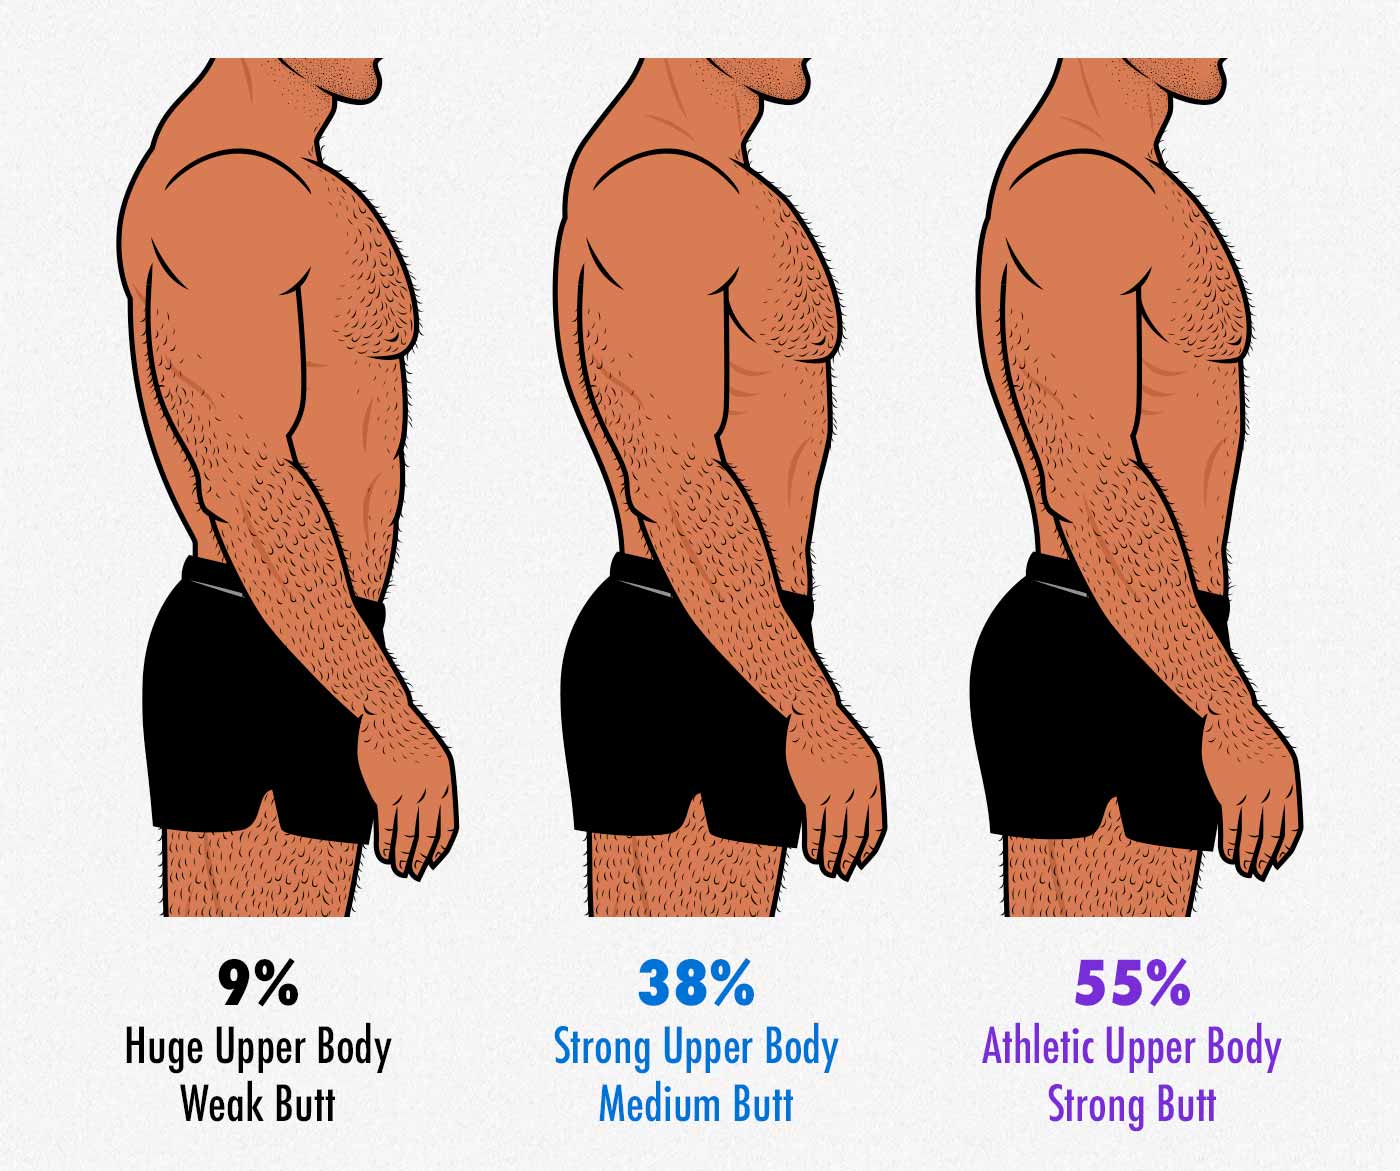 upper-body-vs-butt-proportions-attractive-to-women.jpg